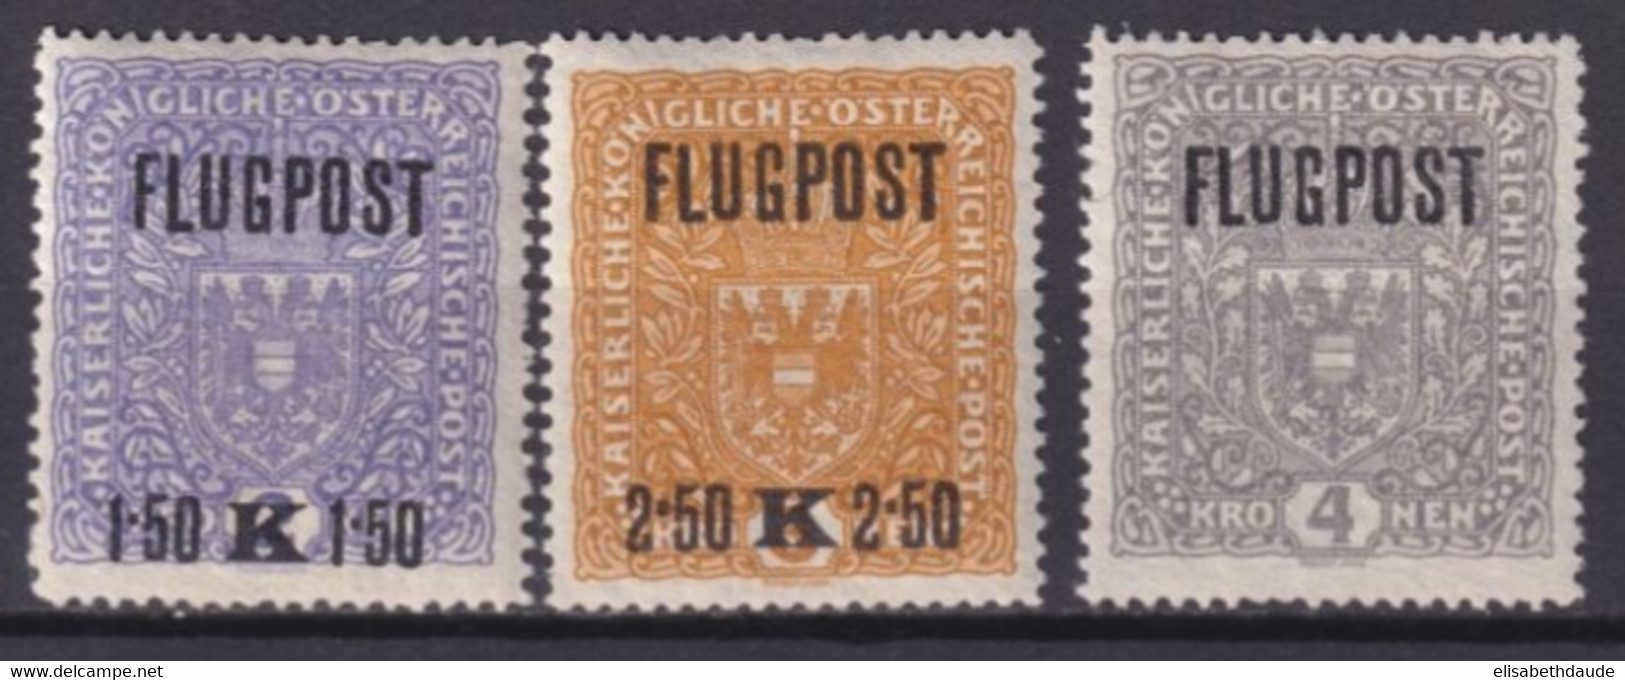 AUTRICHE - 1918 - POSTE AERIENNE YVERT N°1/3 * MLH PAPIER BLANC ! - COTE = 30 EUR. - Unused Stamps